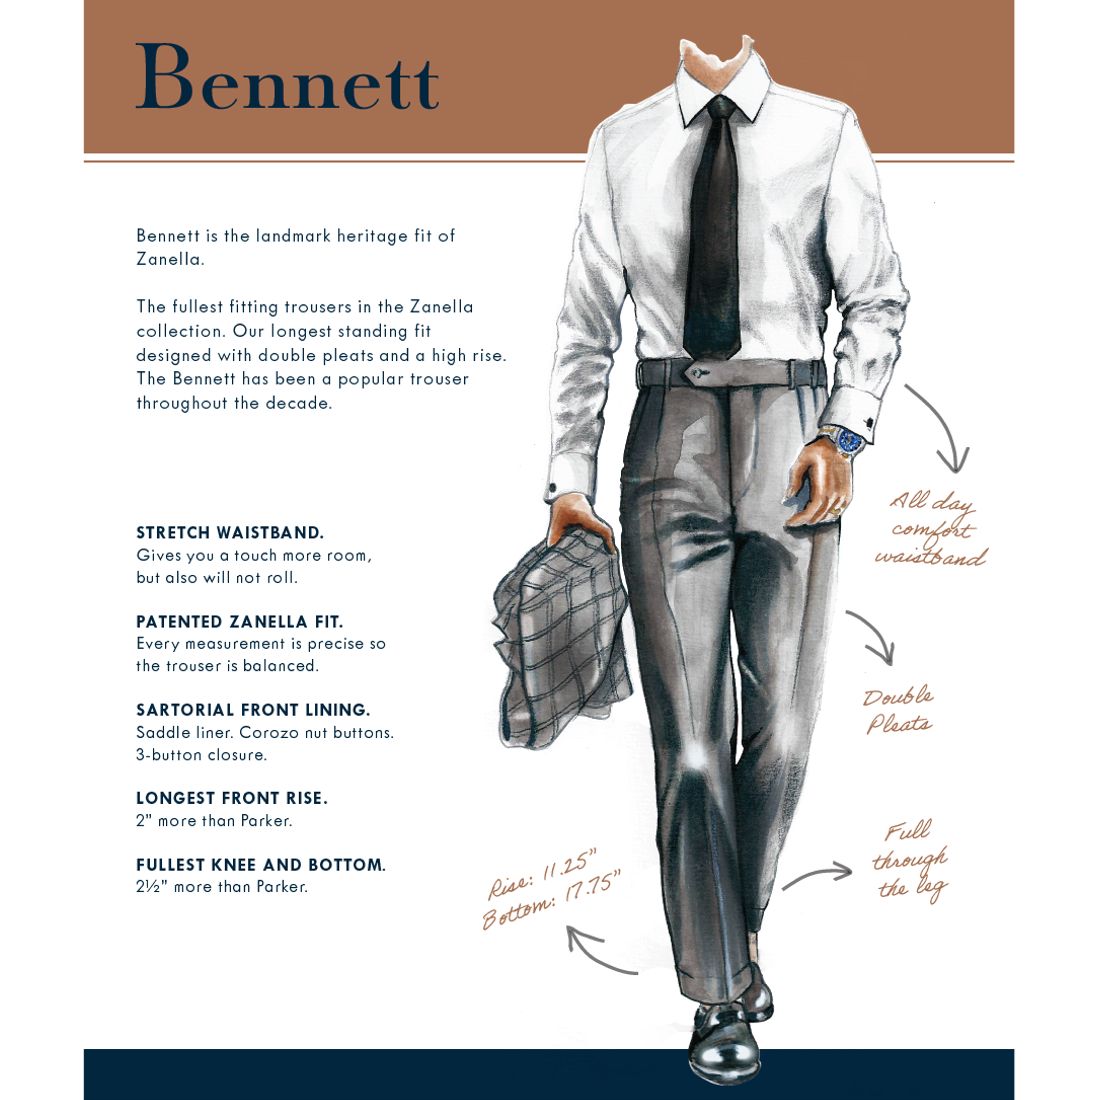 Bennett Double Pleated Super 120s Wool Serge Trouser in Medium Brown (Full Fit) by Zanella